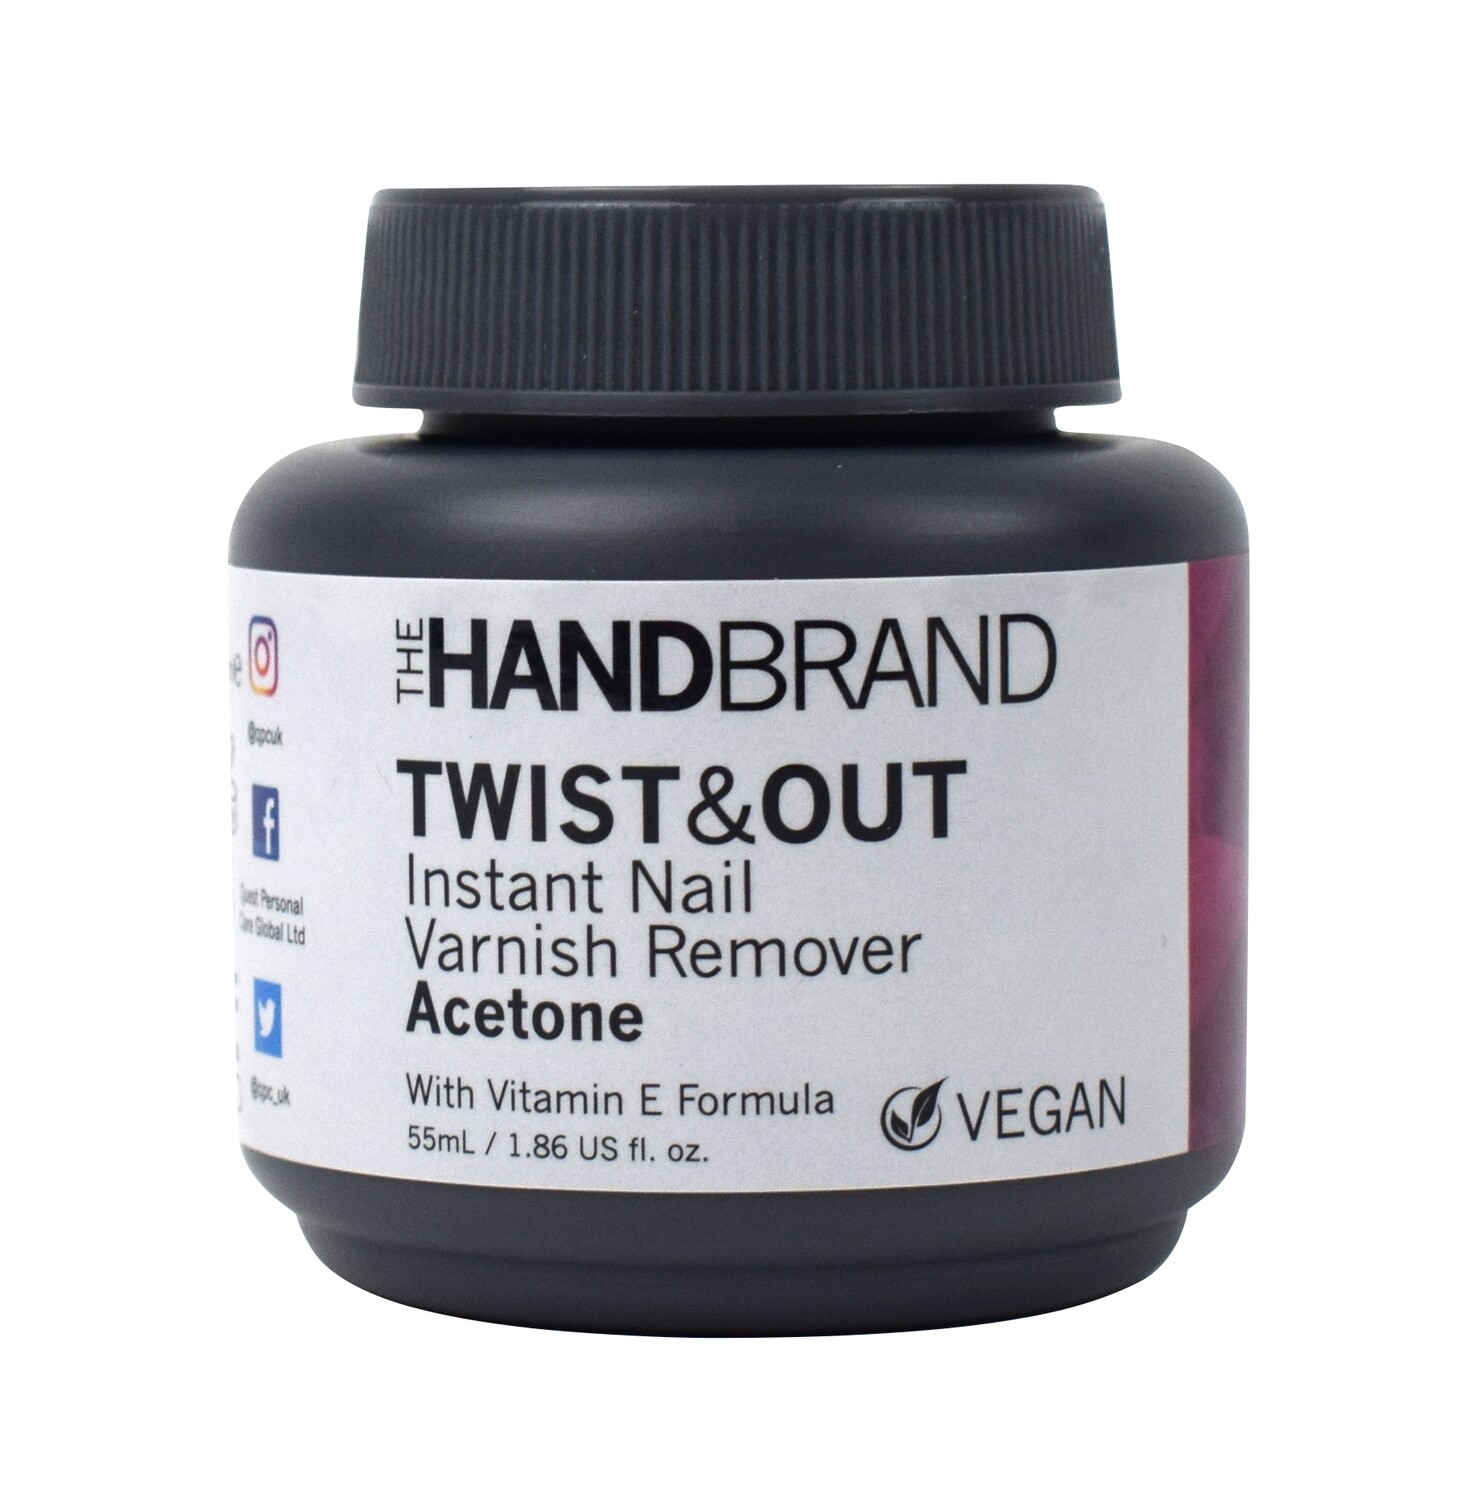 The HandBrand Twist & Out Nail Varnish Remover Sponge Pot - Acetone VEGAN, 55 ml